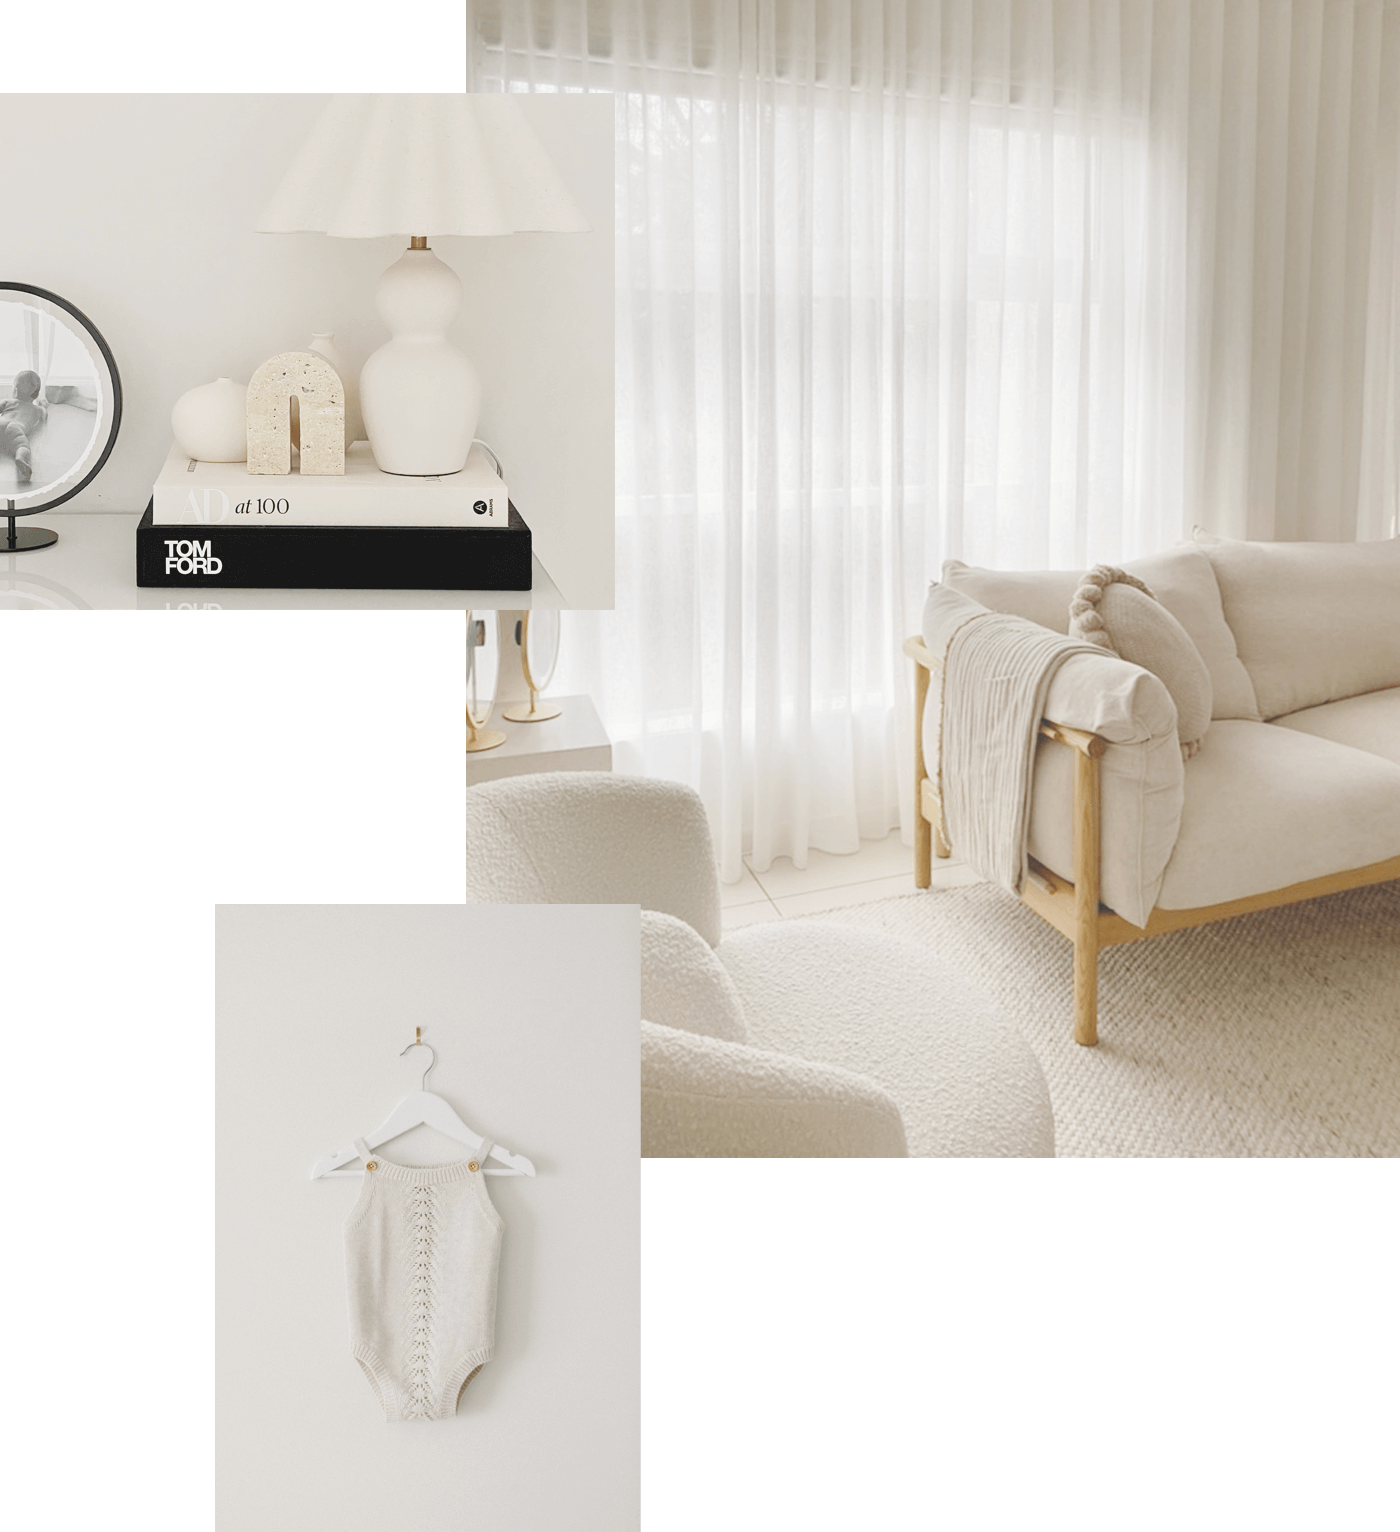 Stylish furniture and modern interior design are a feature of Kristen's studio